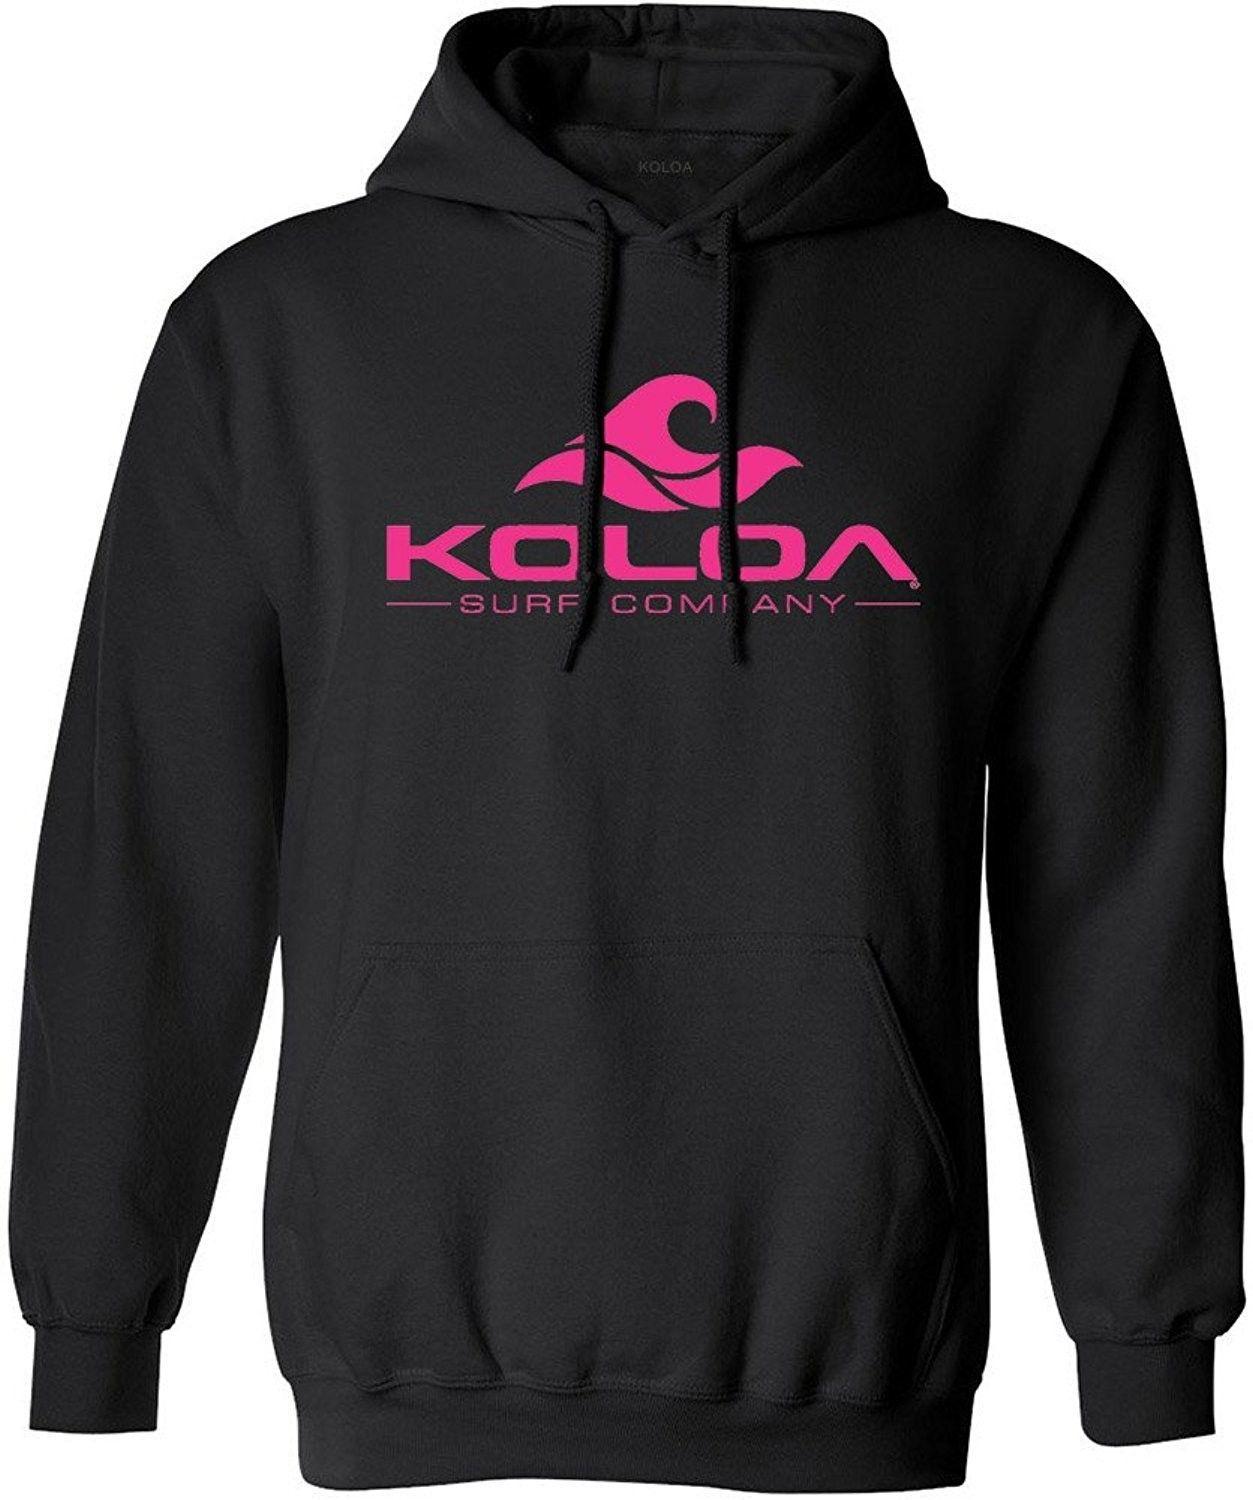 Fashion with a Black Wave Logo - Koloa Surf Wave Logo Hoodies Sweatshirts. In Sizes S 5XL